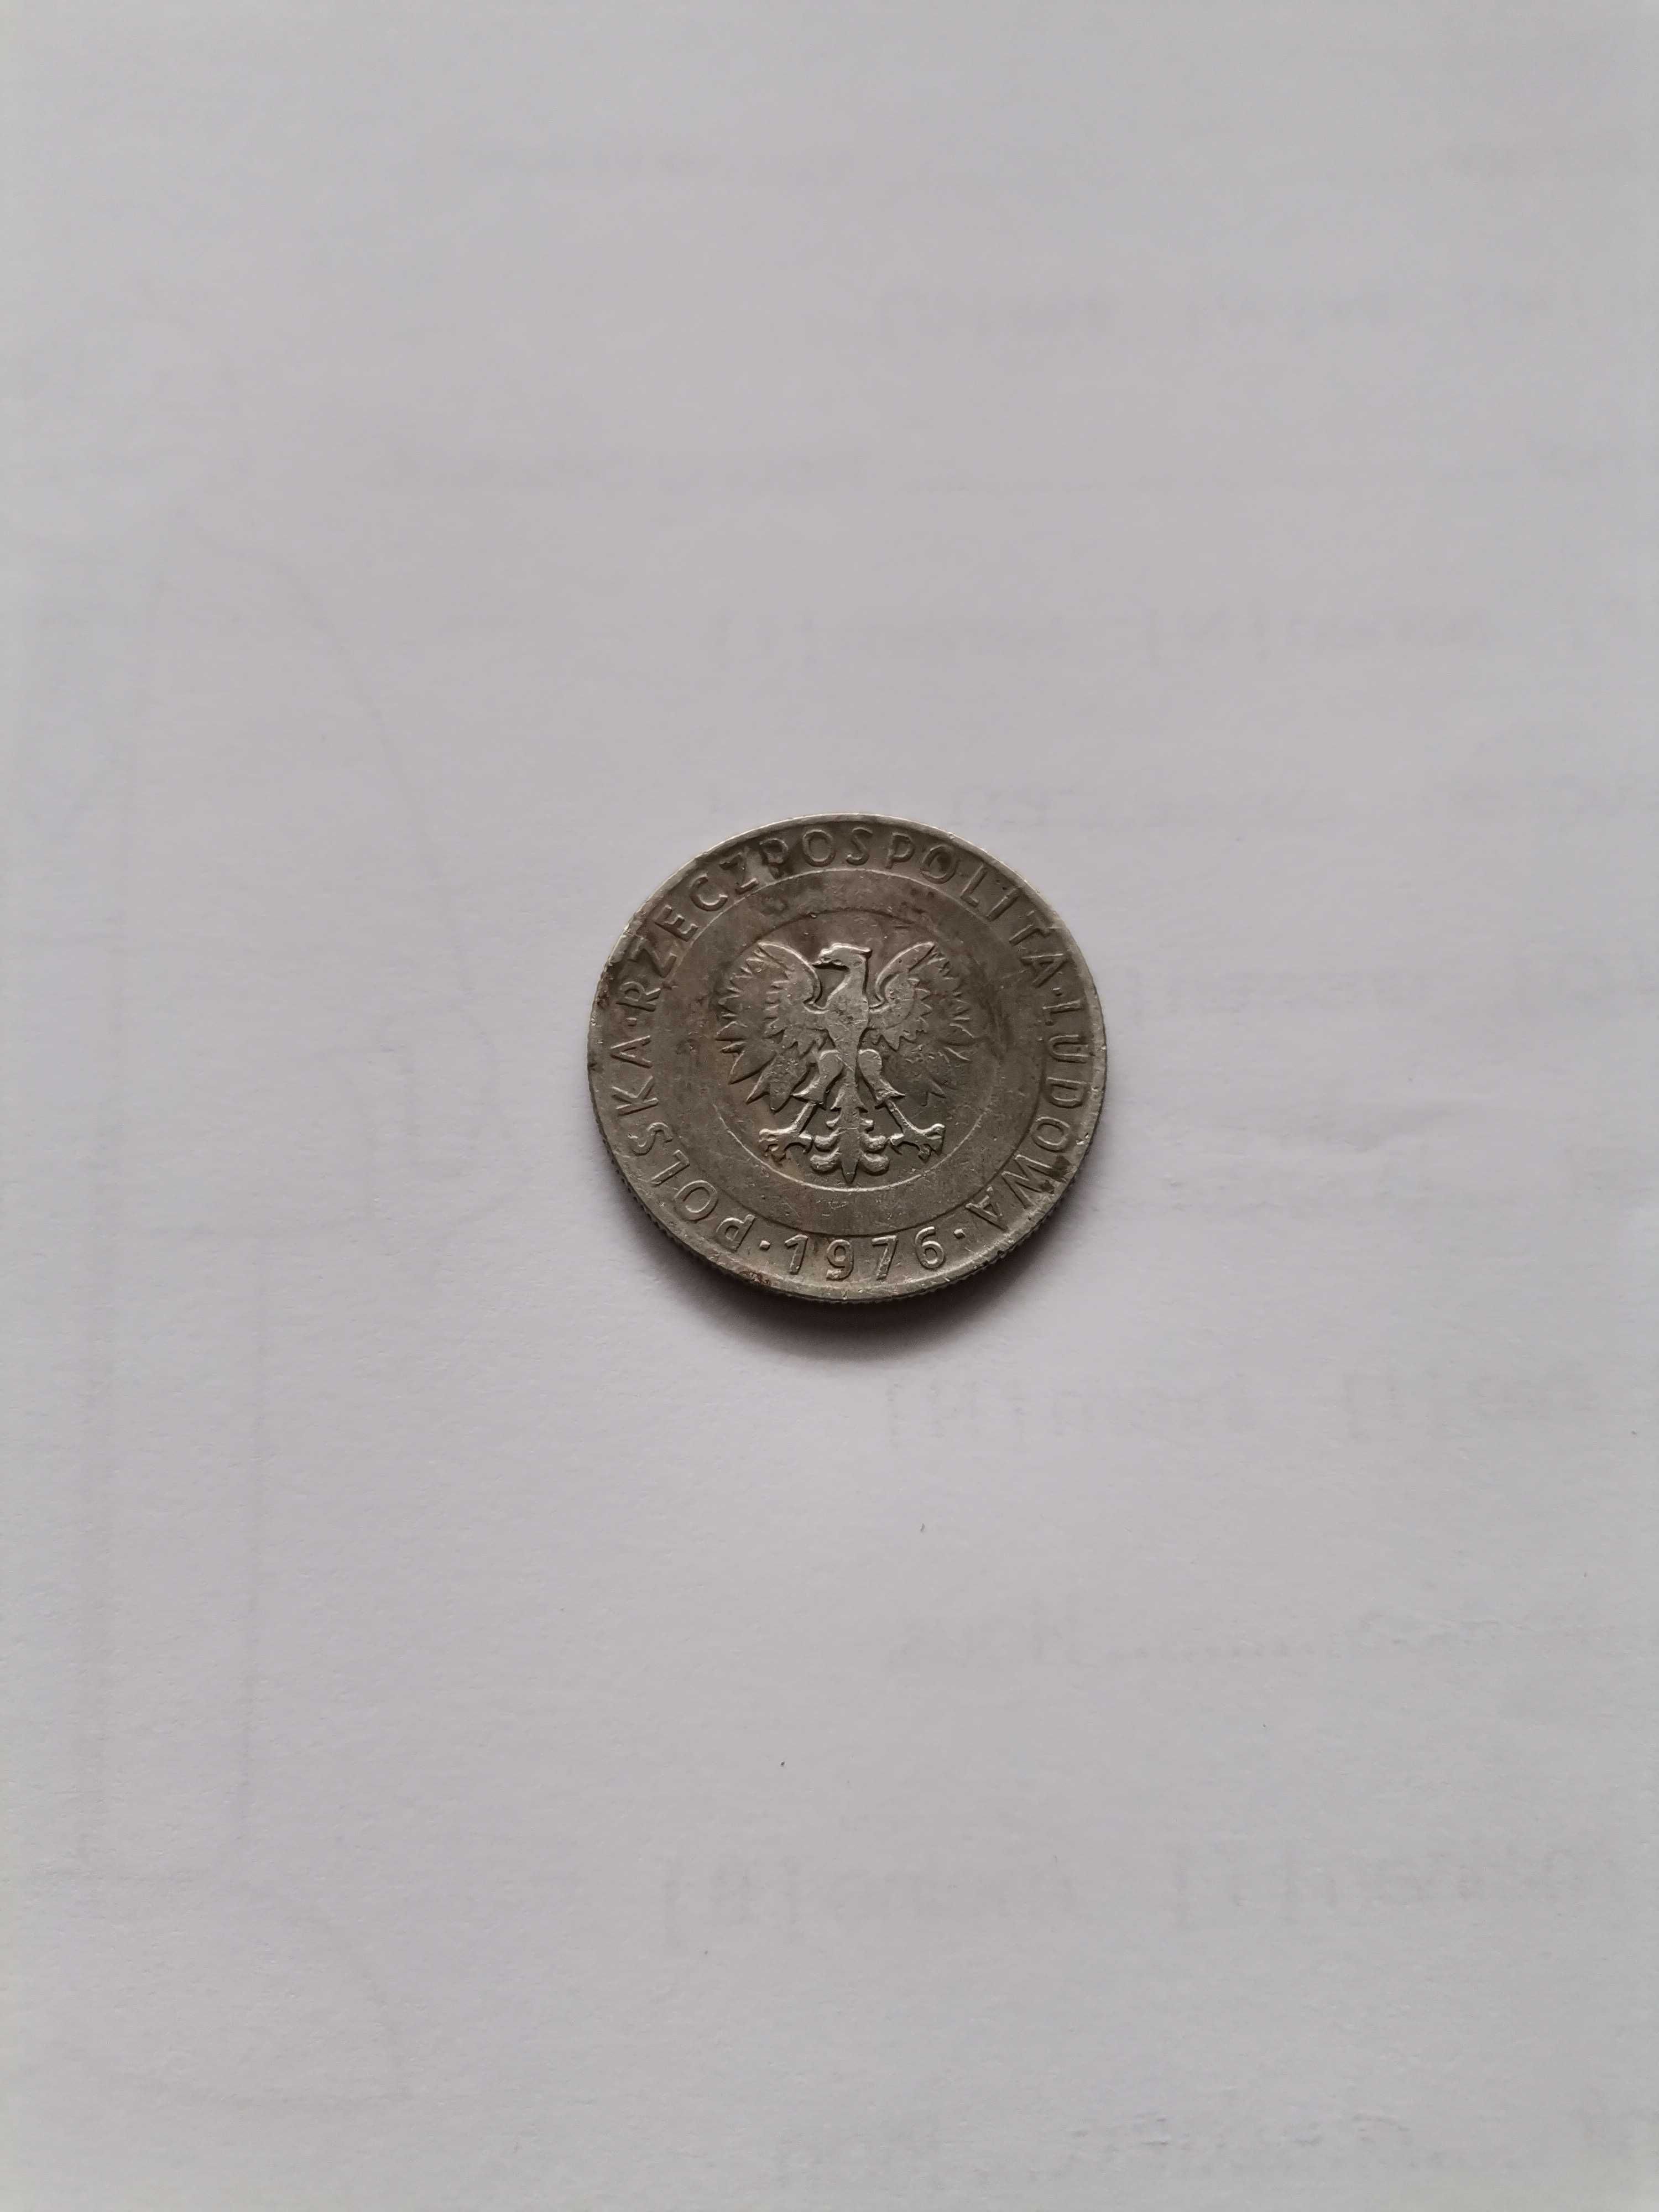 Moneta 20 zł z 1976r.